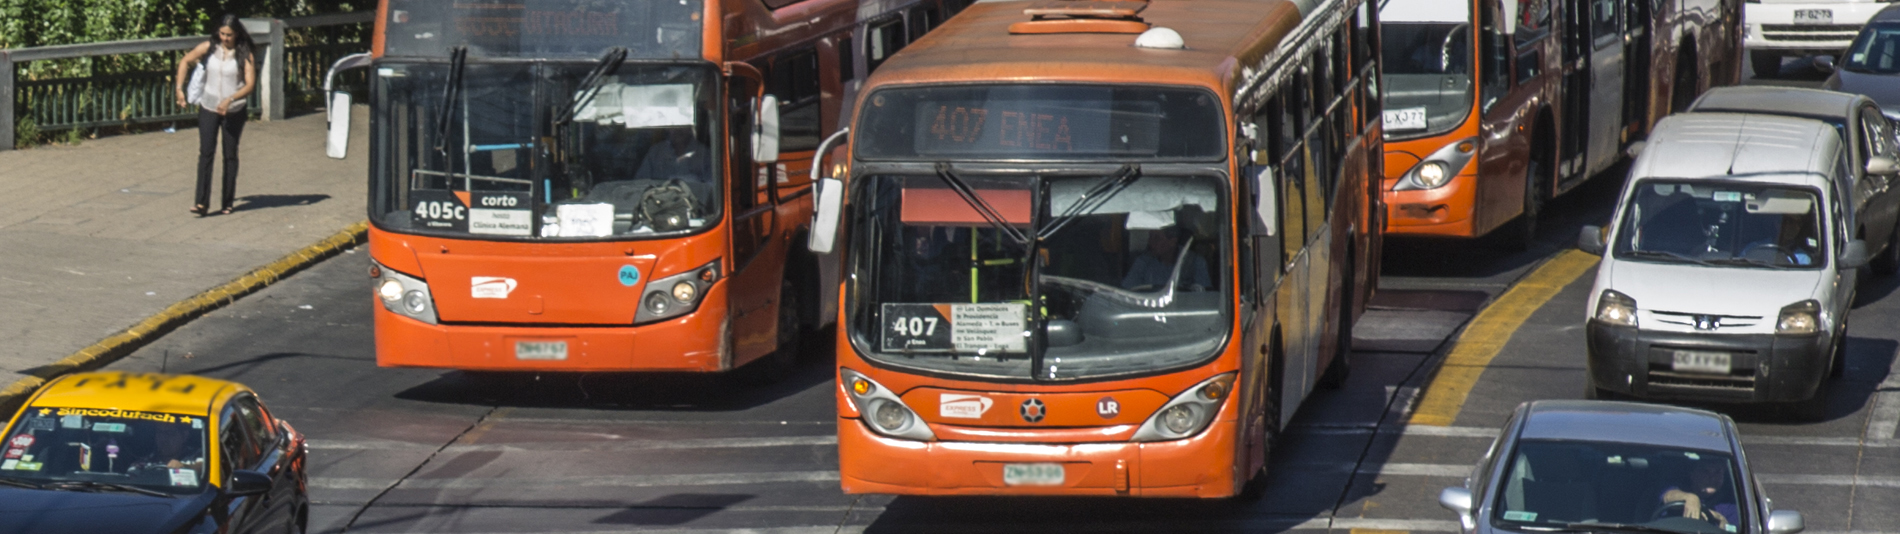 Urban Buses (Micros) in Santiago